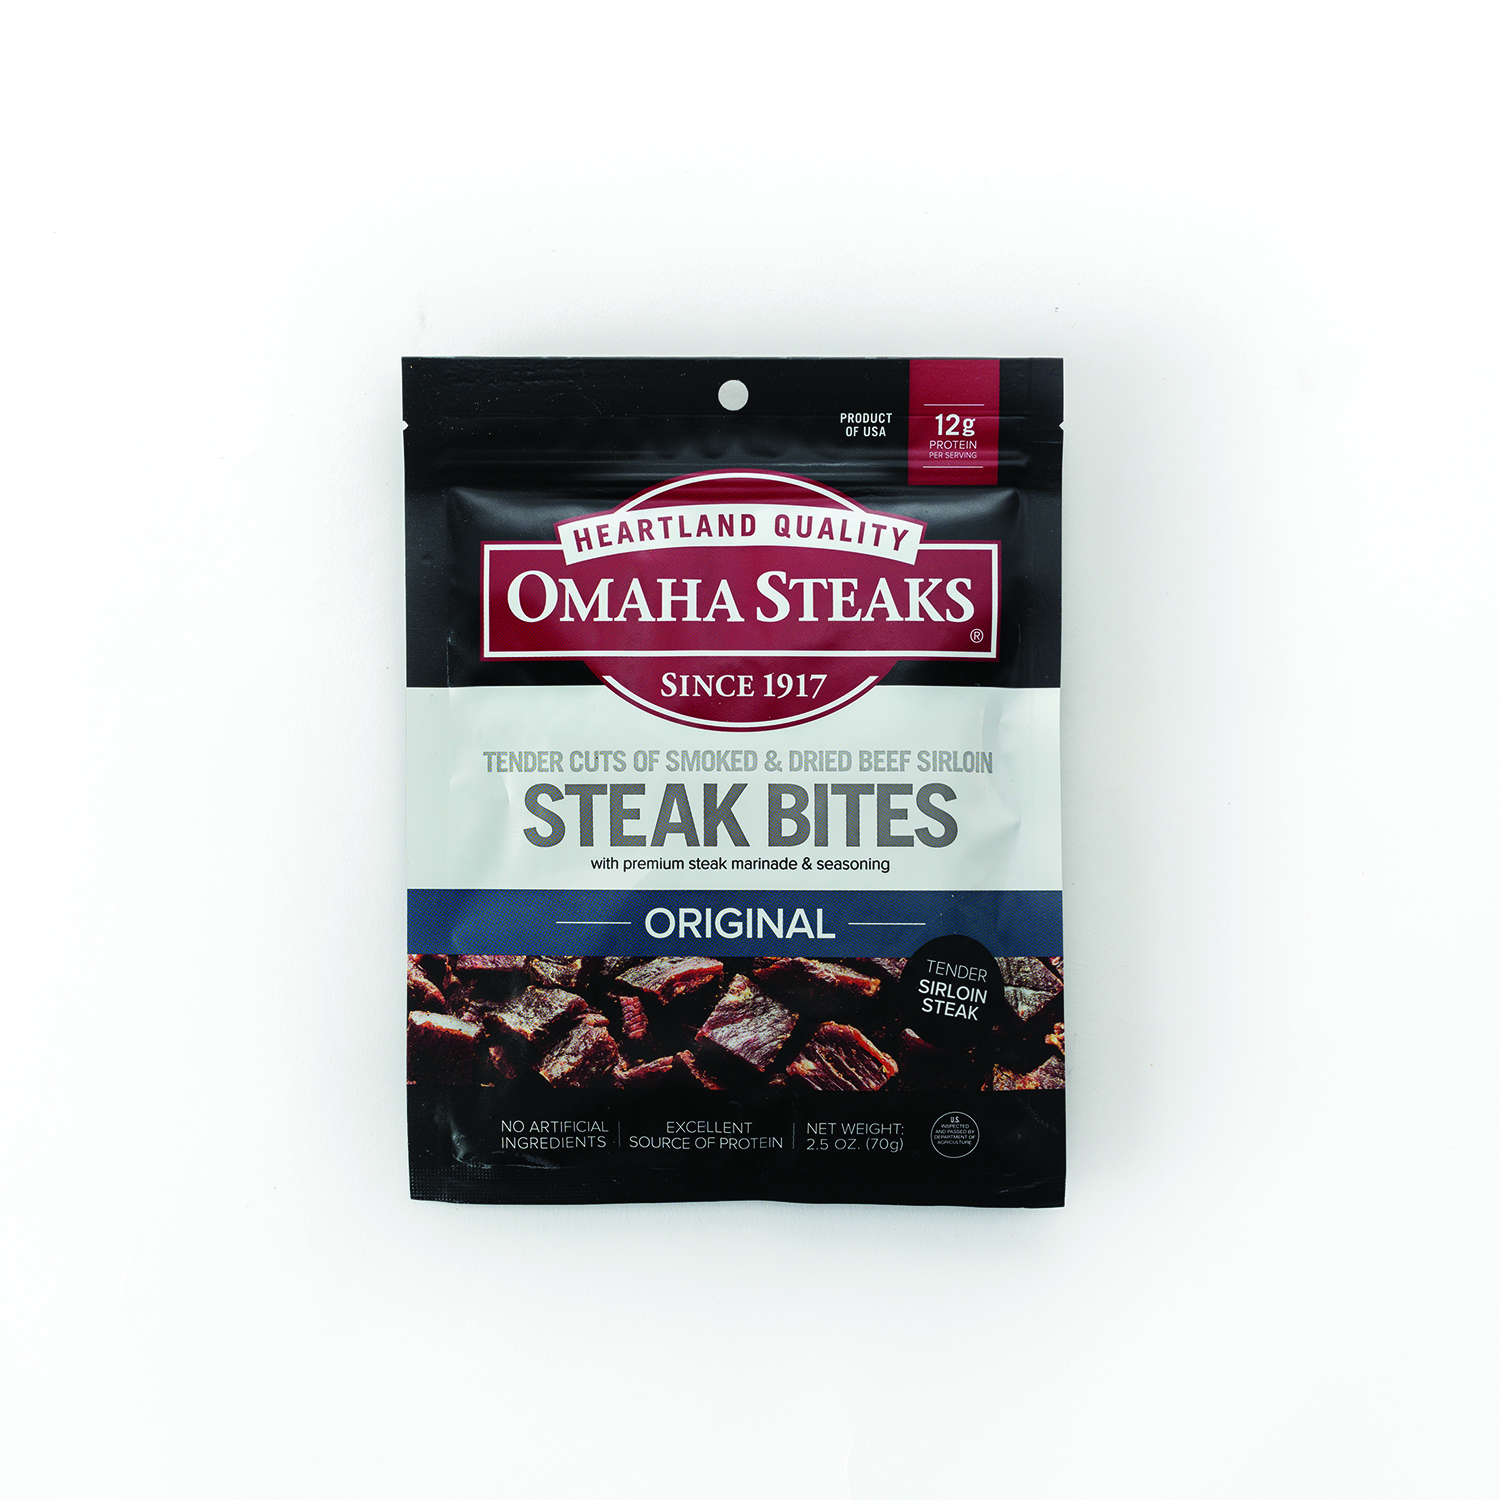 The Omaha Steaks Steak Snacks are available in three varieties - Beef Jerky, Beef Sticks and Steak Bites.